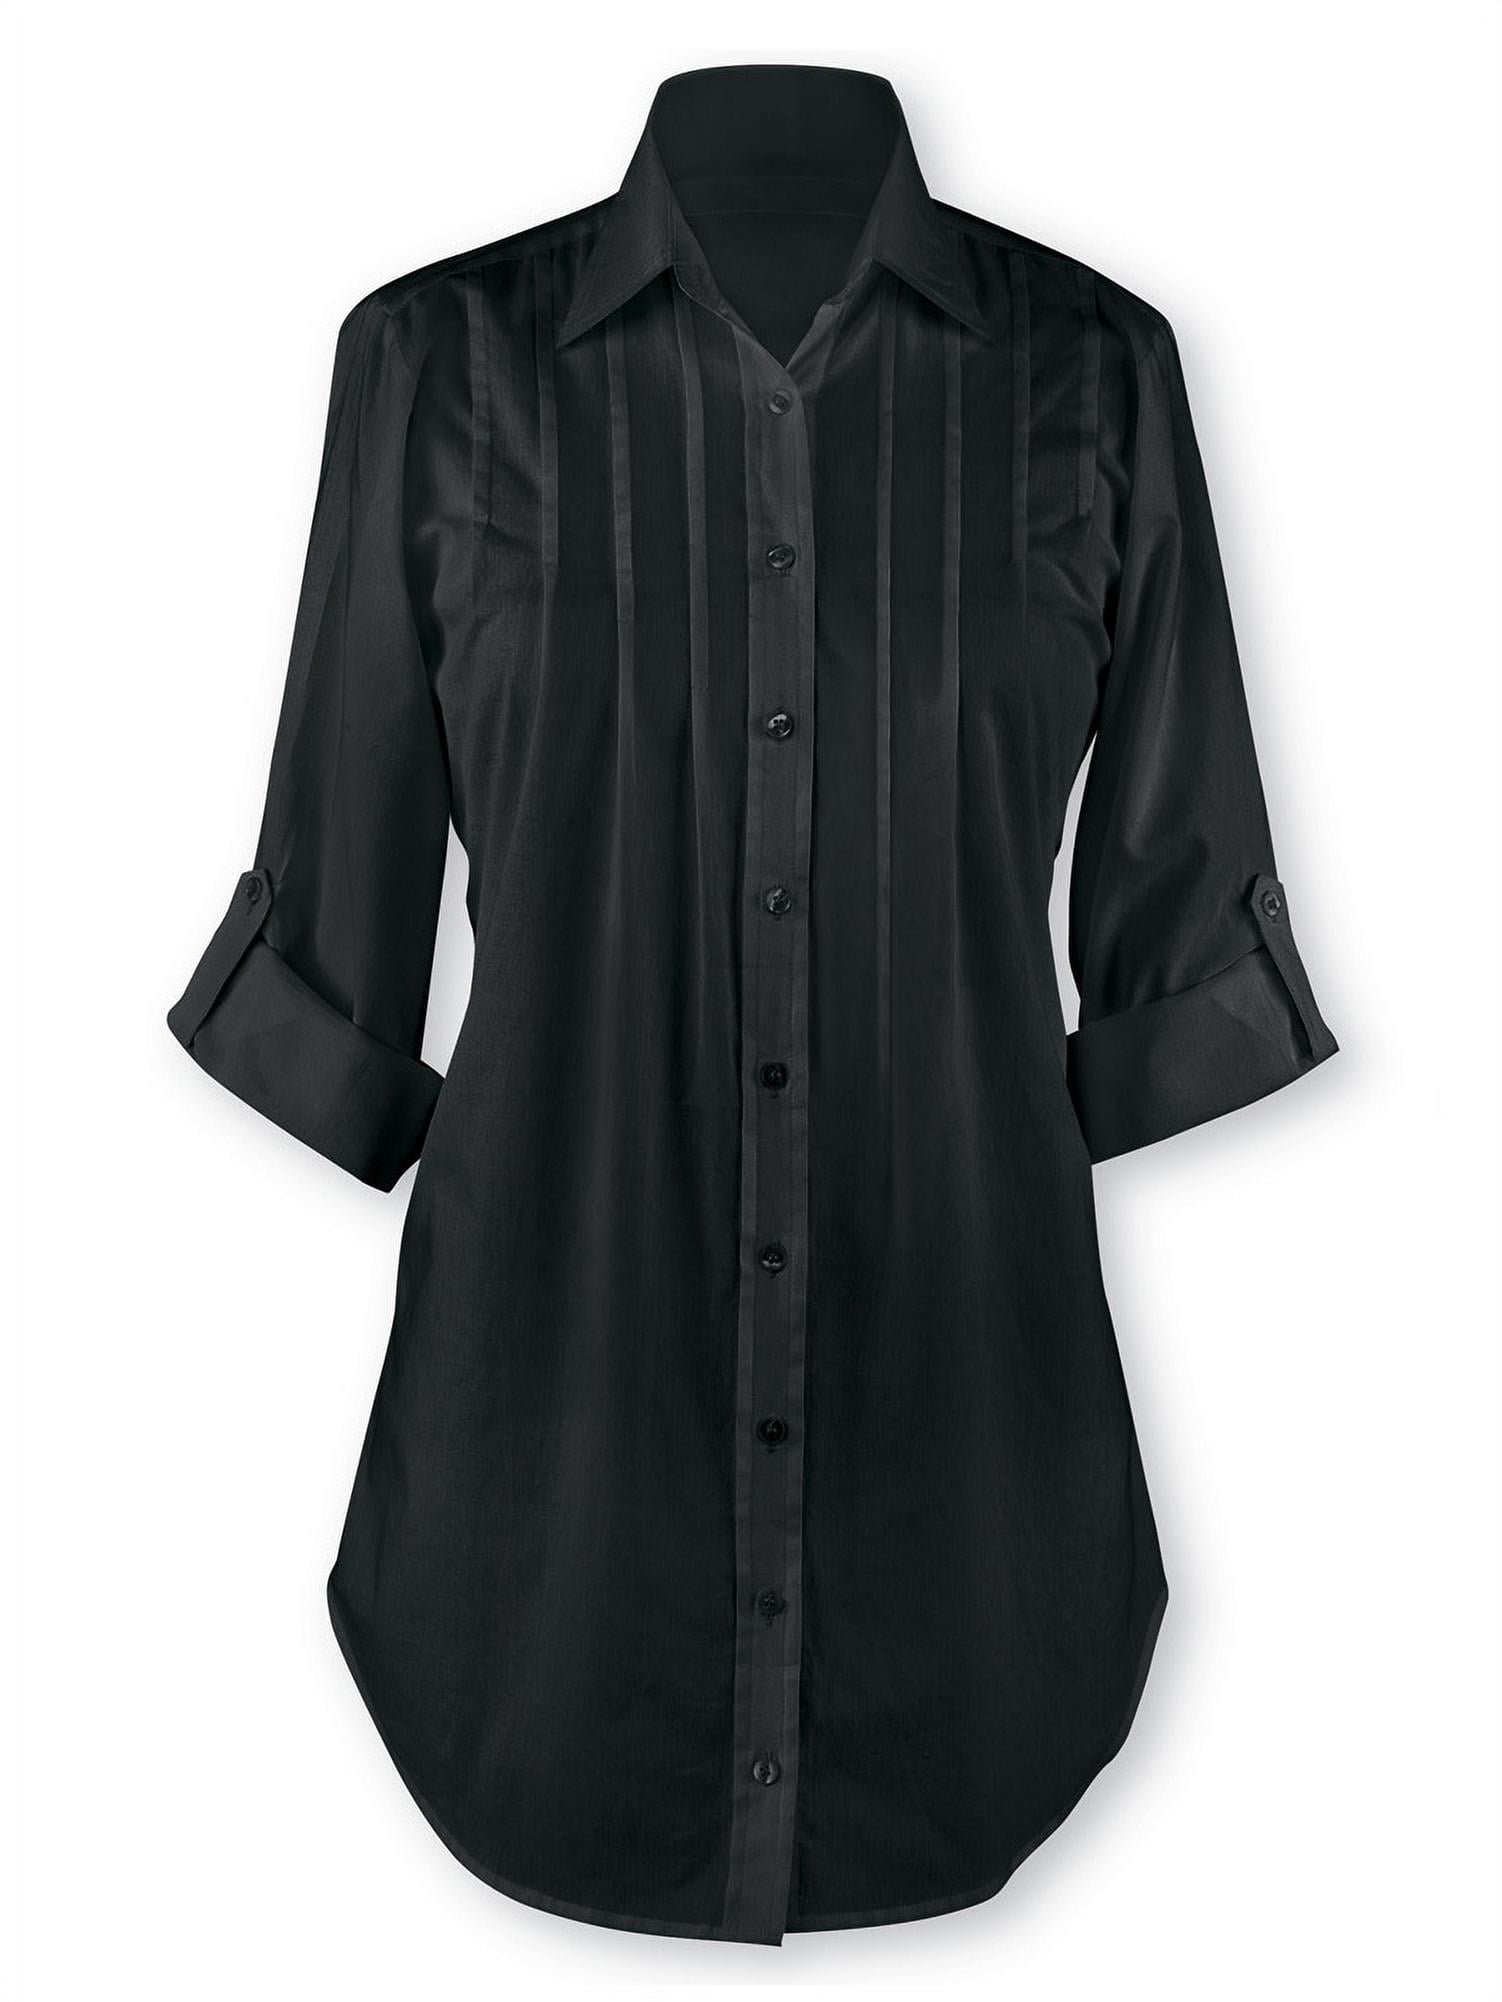 Women's Pintuck Button Front Tunic Top, Large, Black - Walmart.com